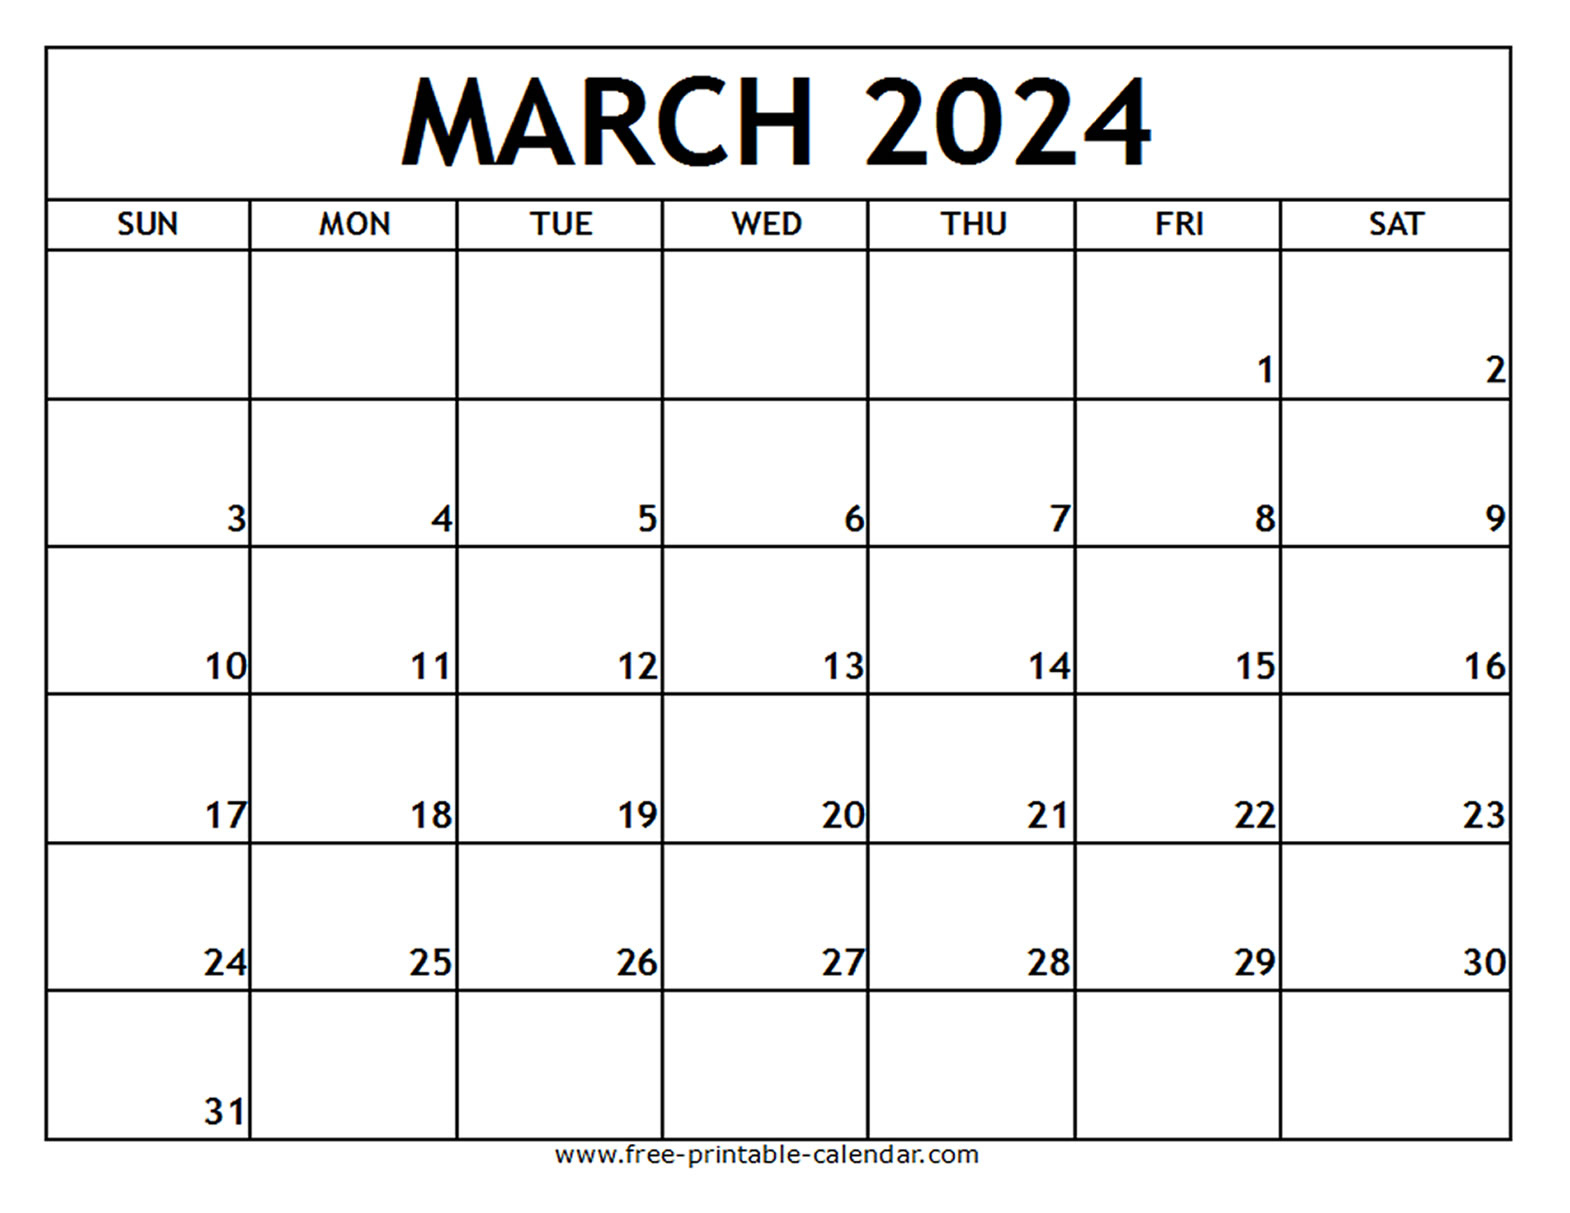 March 2024 Printable Calendar - Free-Printable-Calendar | March Printable Calendar 2024